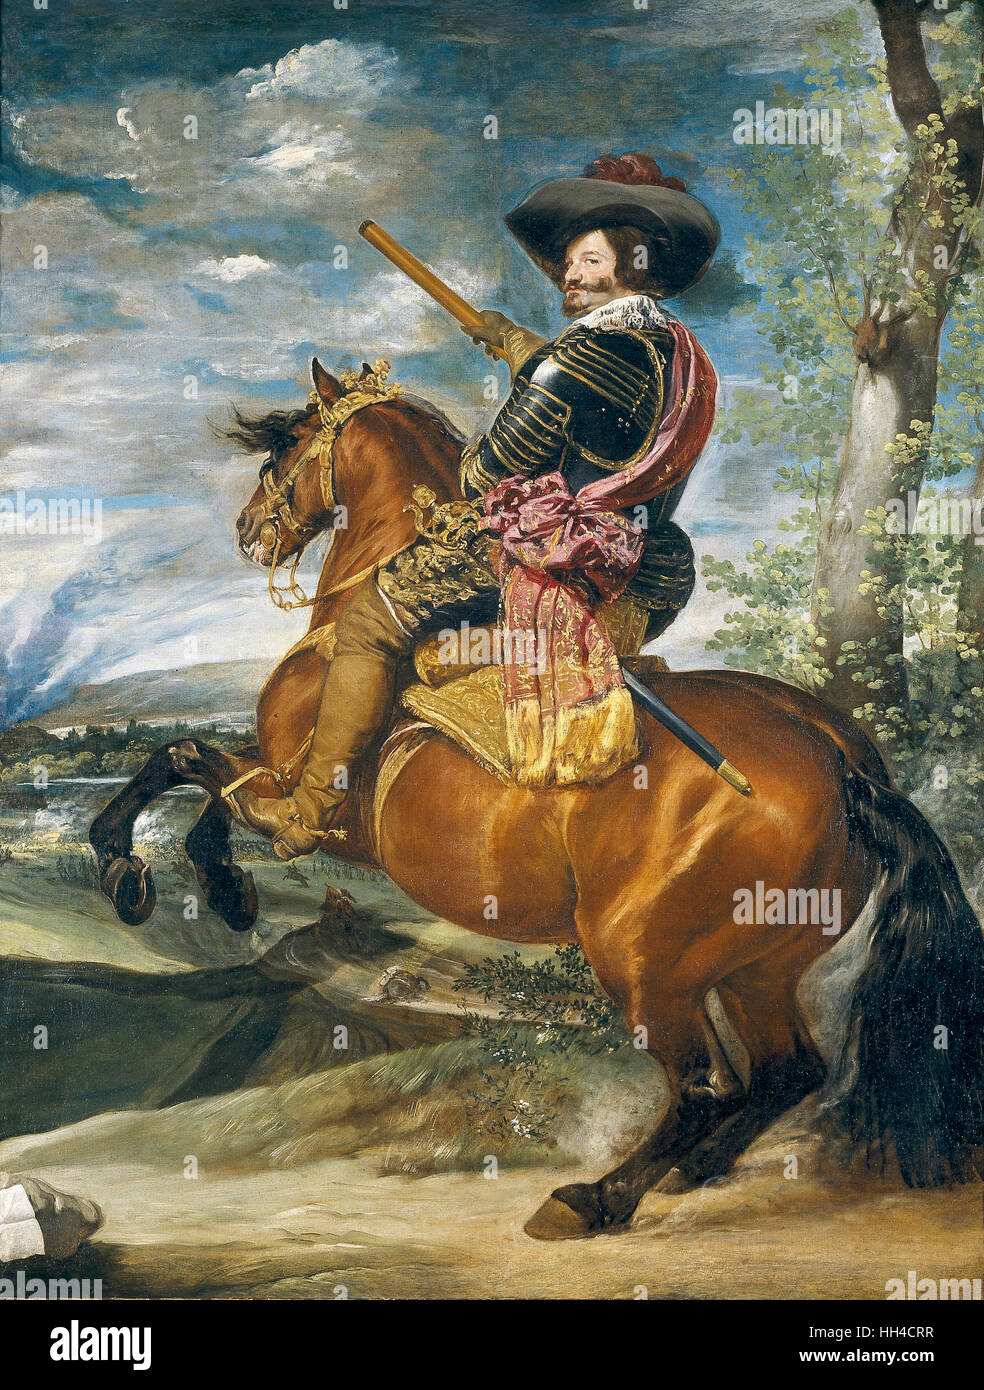 Count-Duke Olivares, da Diego Velázquez. Gaspar de Guzmán, Count-Duke di Olivares Ritratto equestre dell'Count-Duke di Olivares da Diego Velázquez 1636 Foto Stock